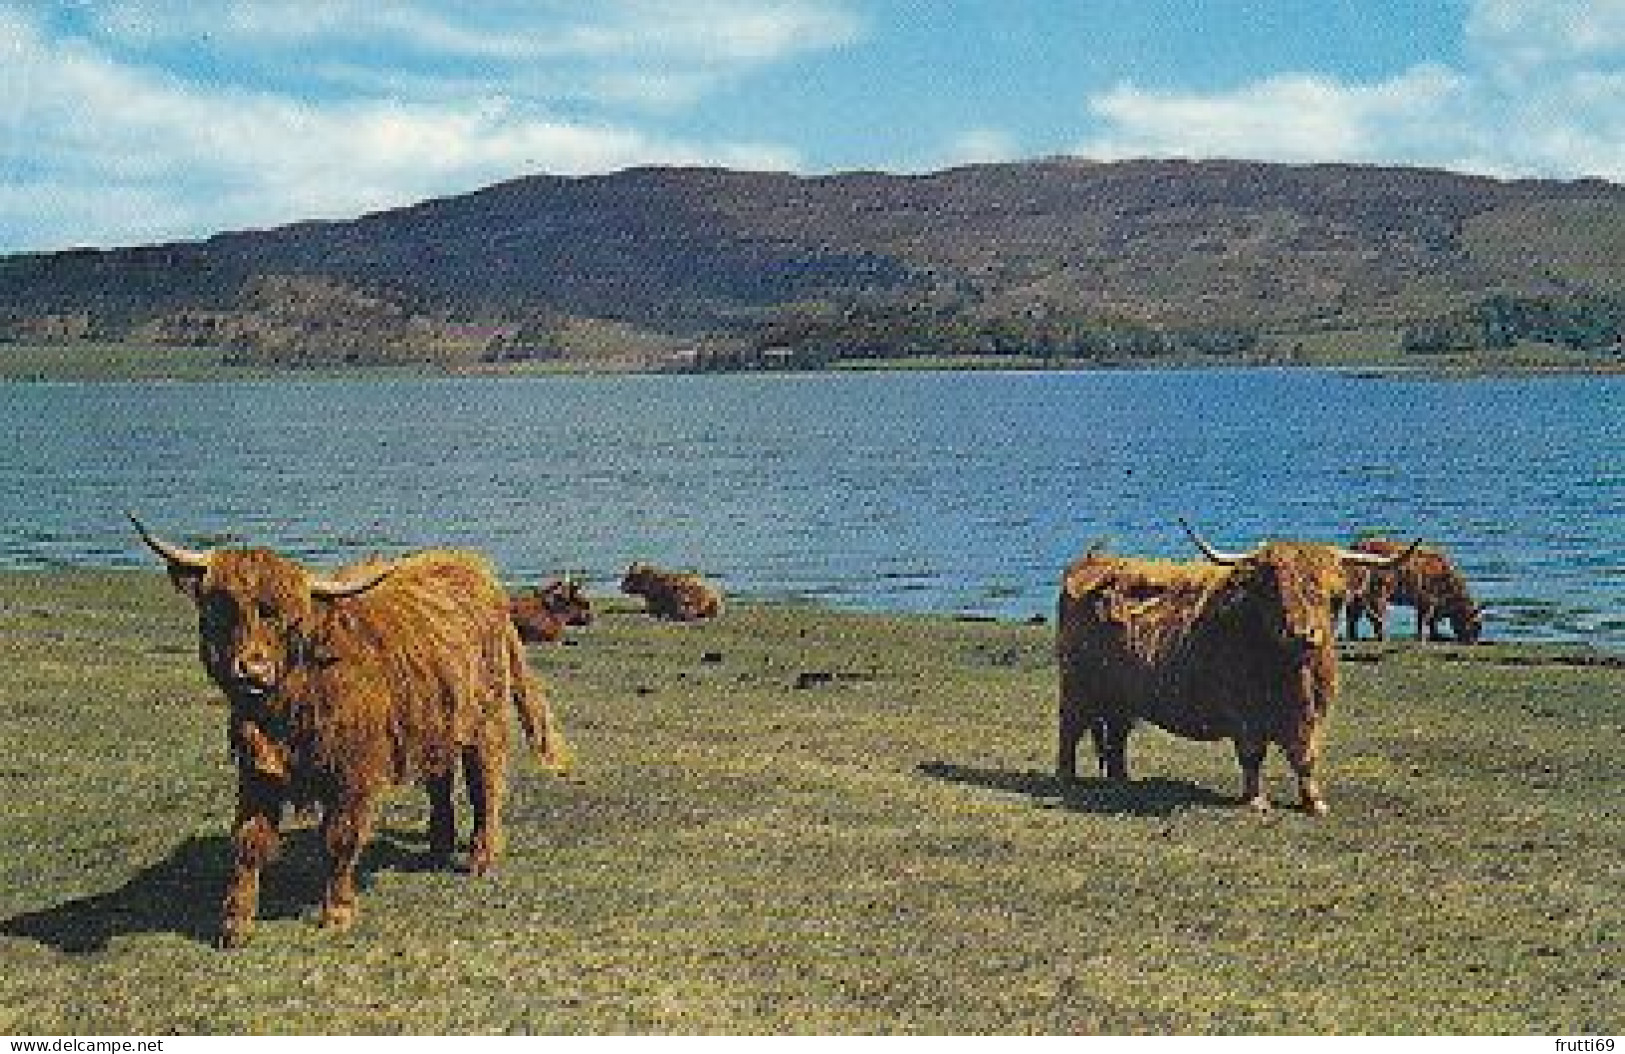 AK 152788 Highland Cattle By The Loch Side - Taureaux